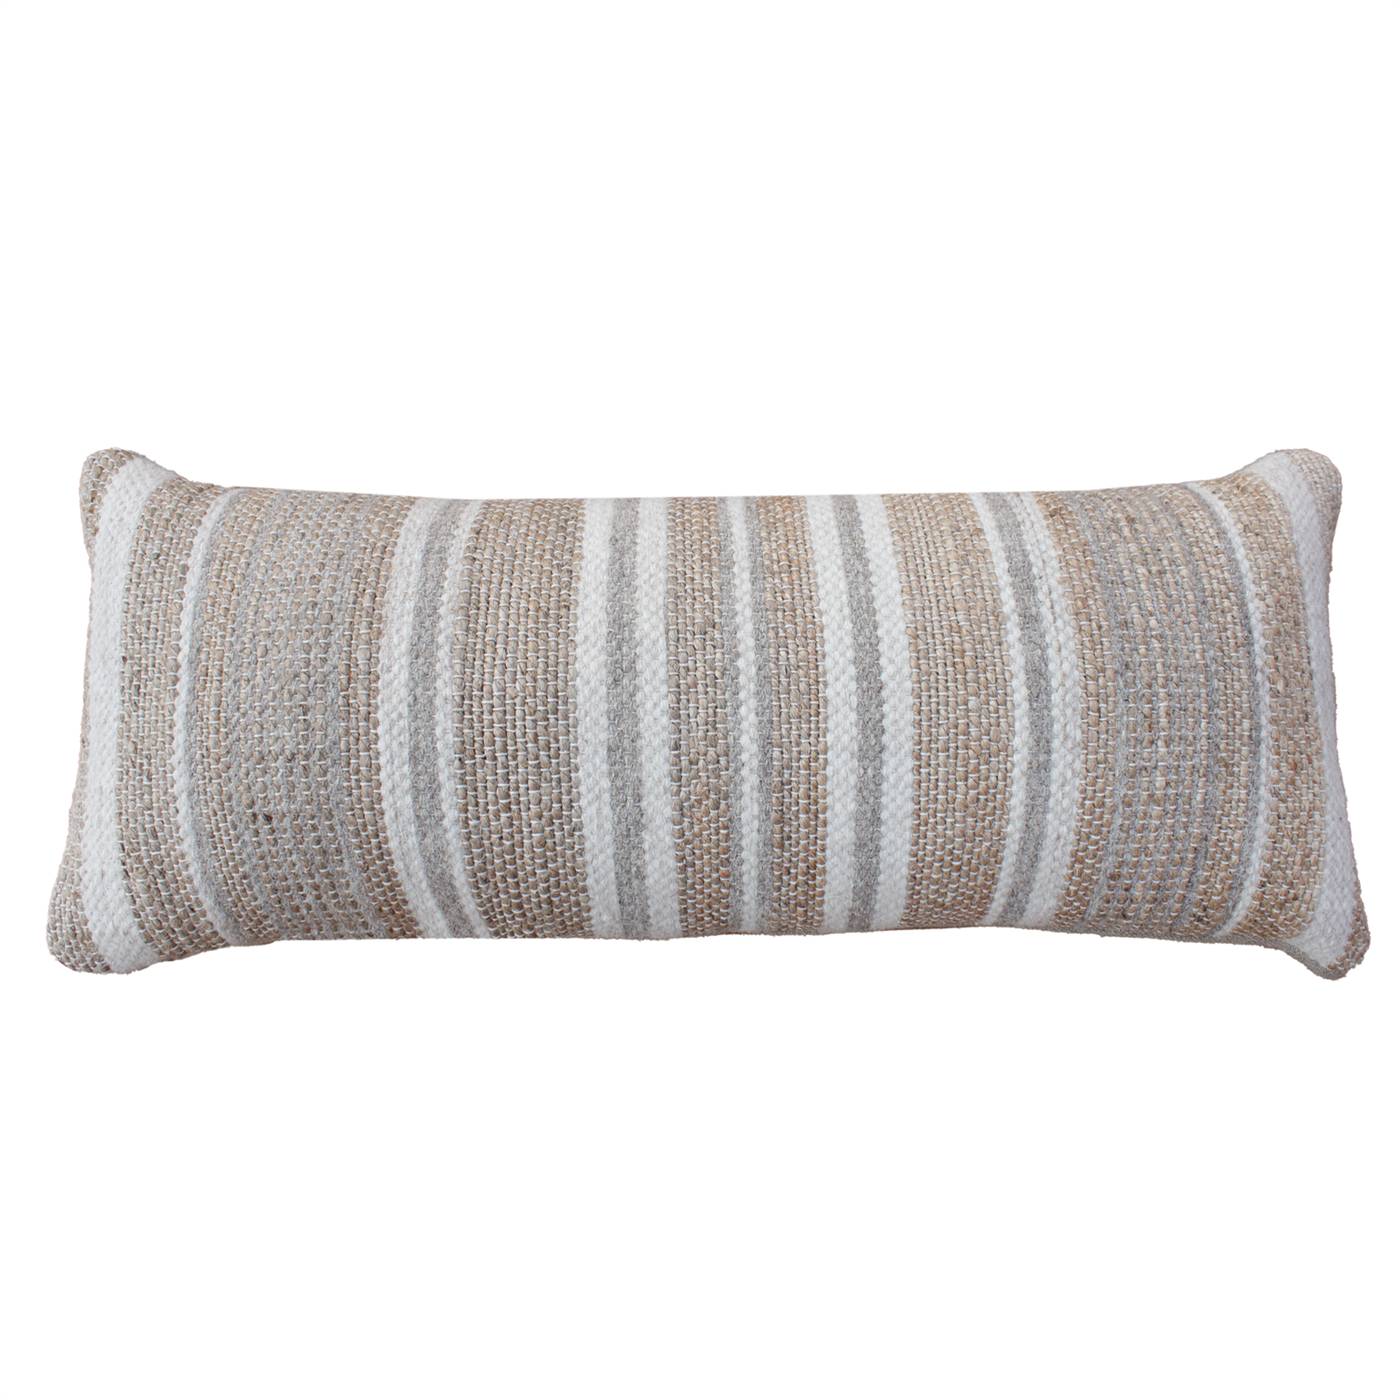 Burdick Lumber Cushion, 36x91 cm, Natural, Natural White, Grey, Jute, Wool, Hand Woven, Pitloom, Flat Weave